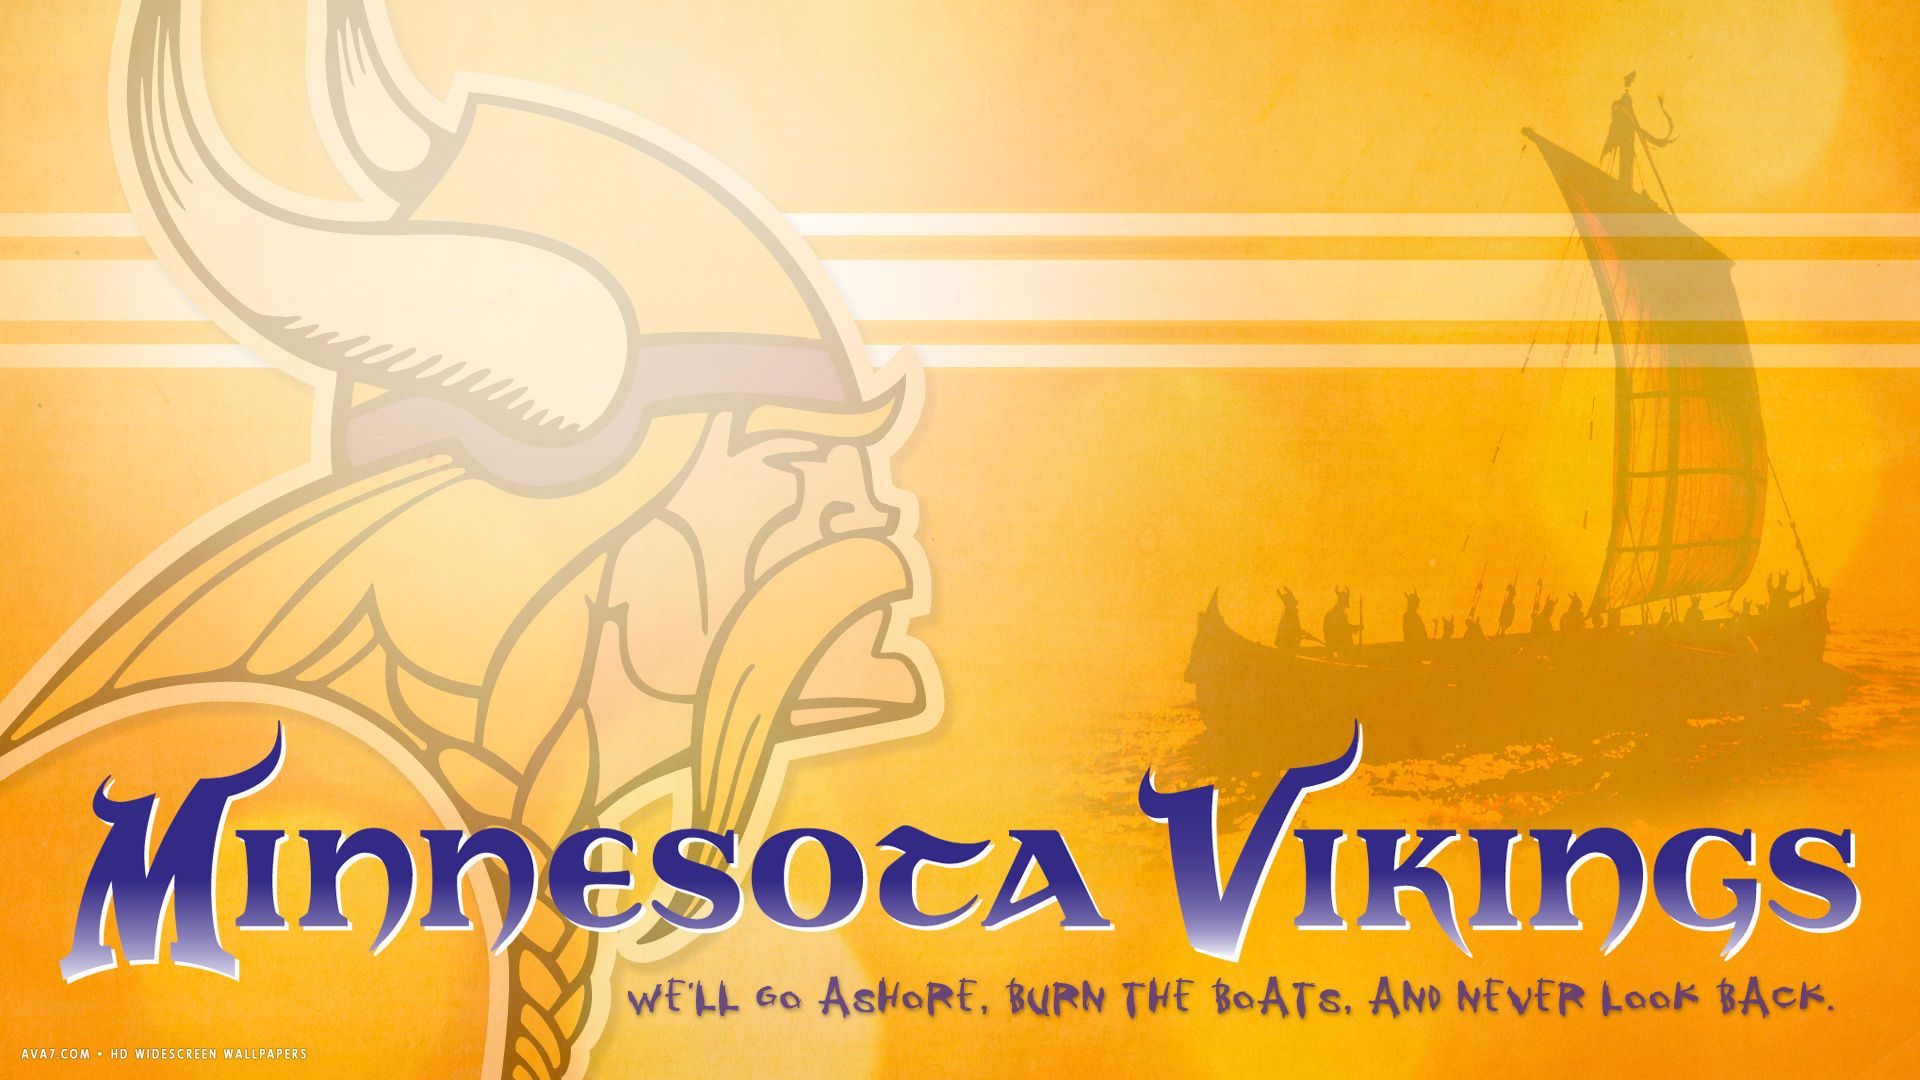 minnesota vikings nfl football team hd widescreen wallpapers / american football teams backgrounds